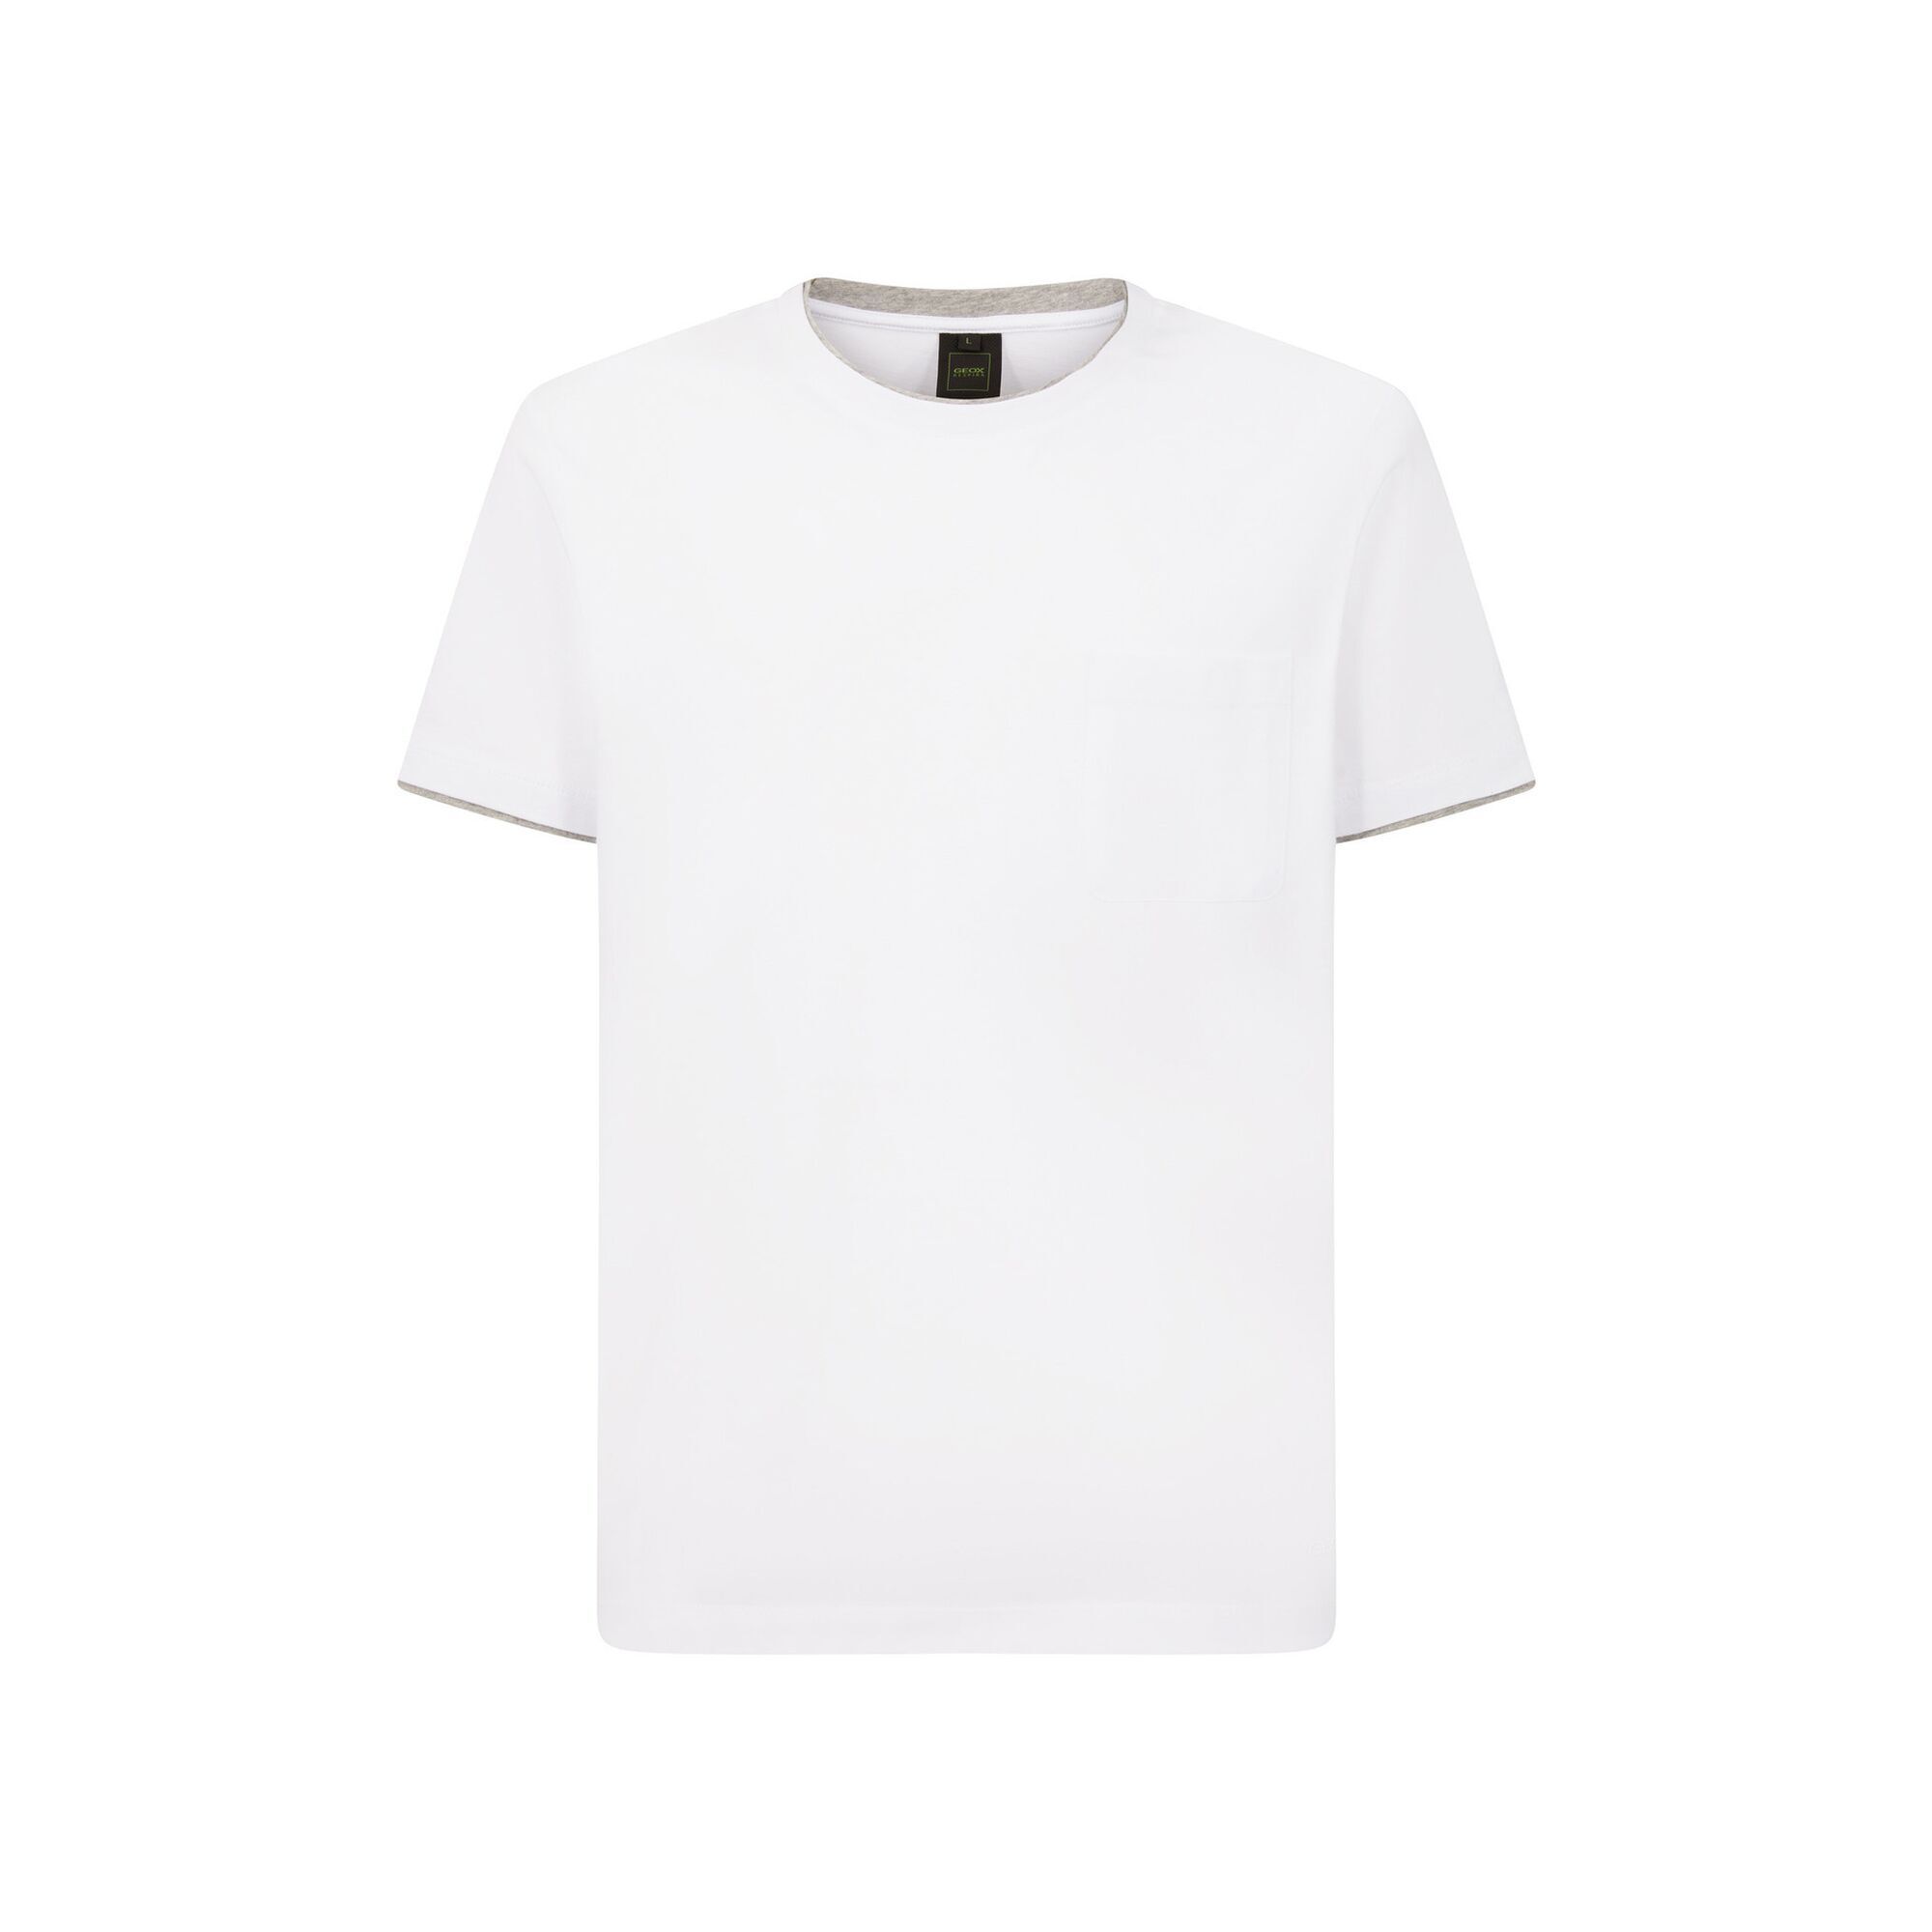 t-shirt geox pocket r/n - bci